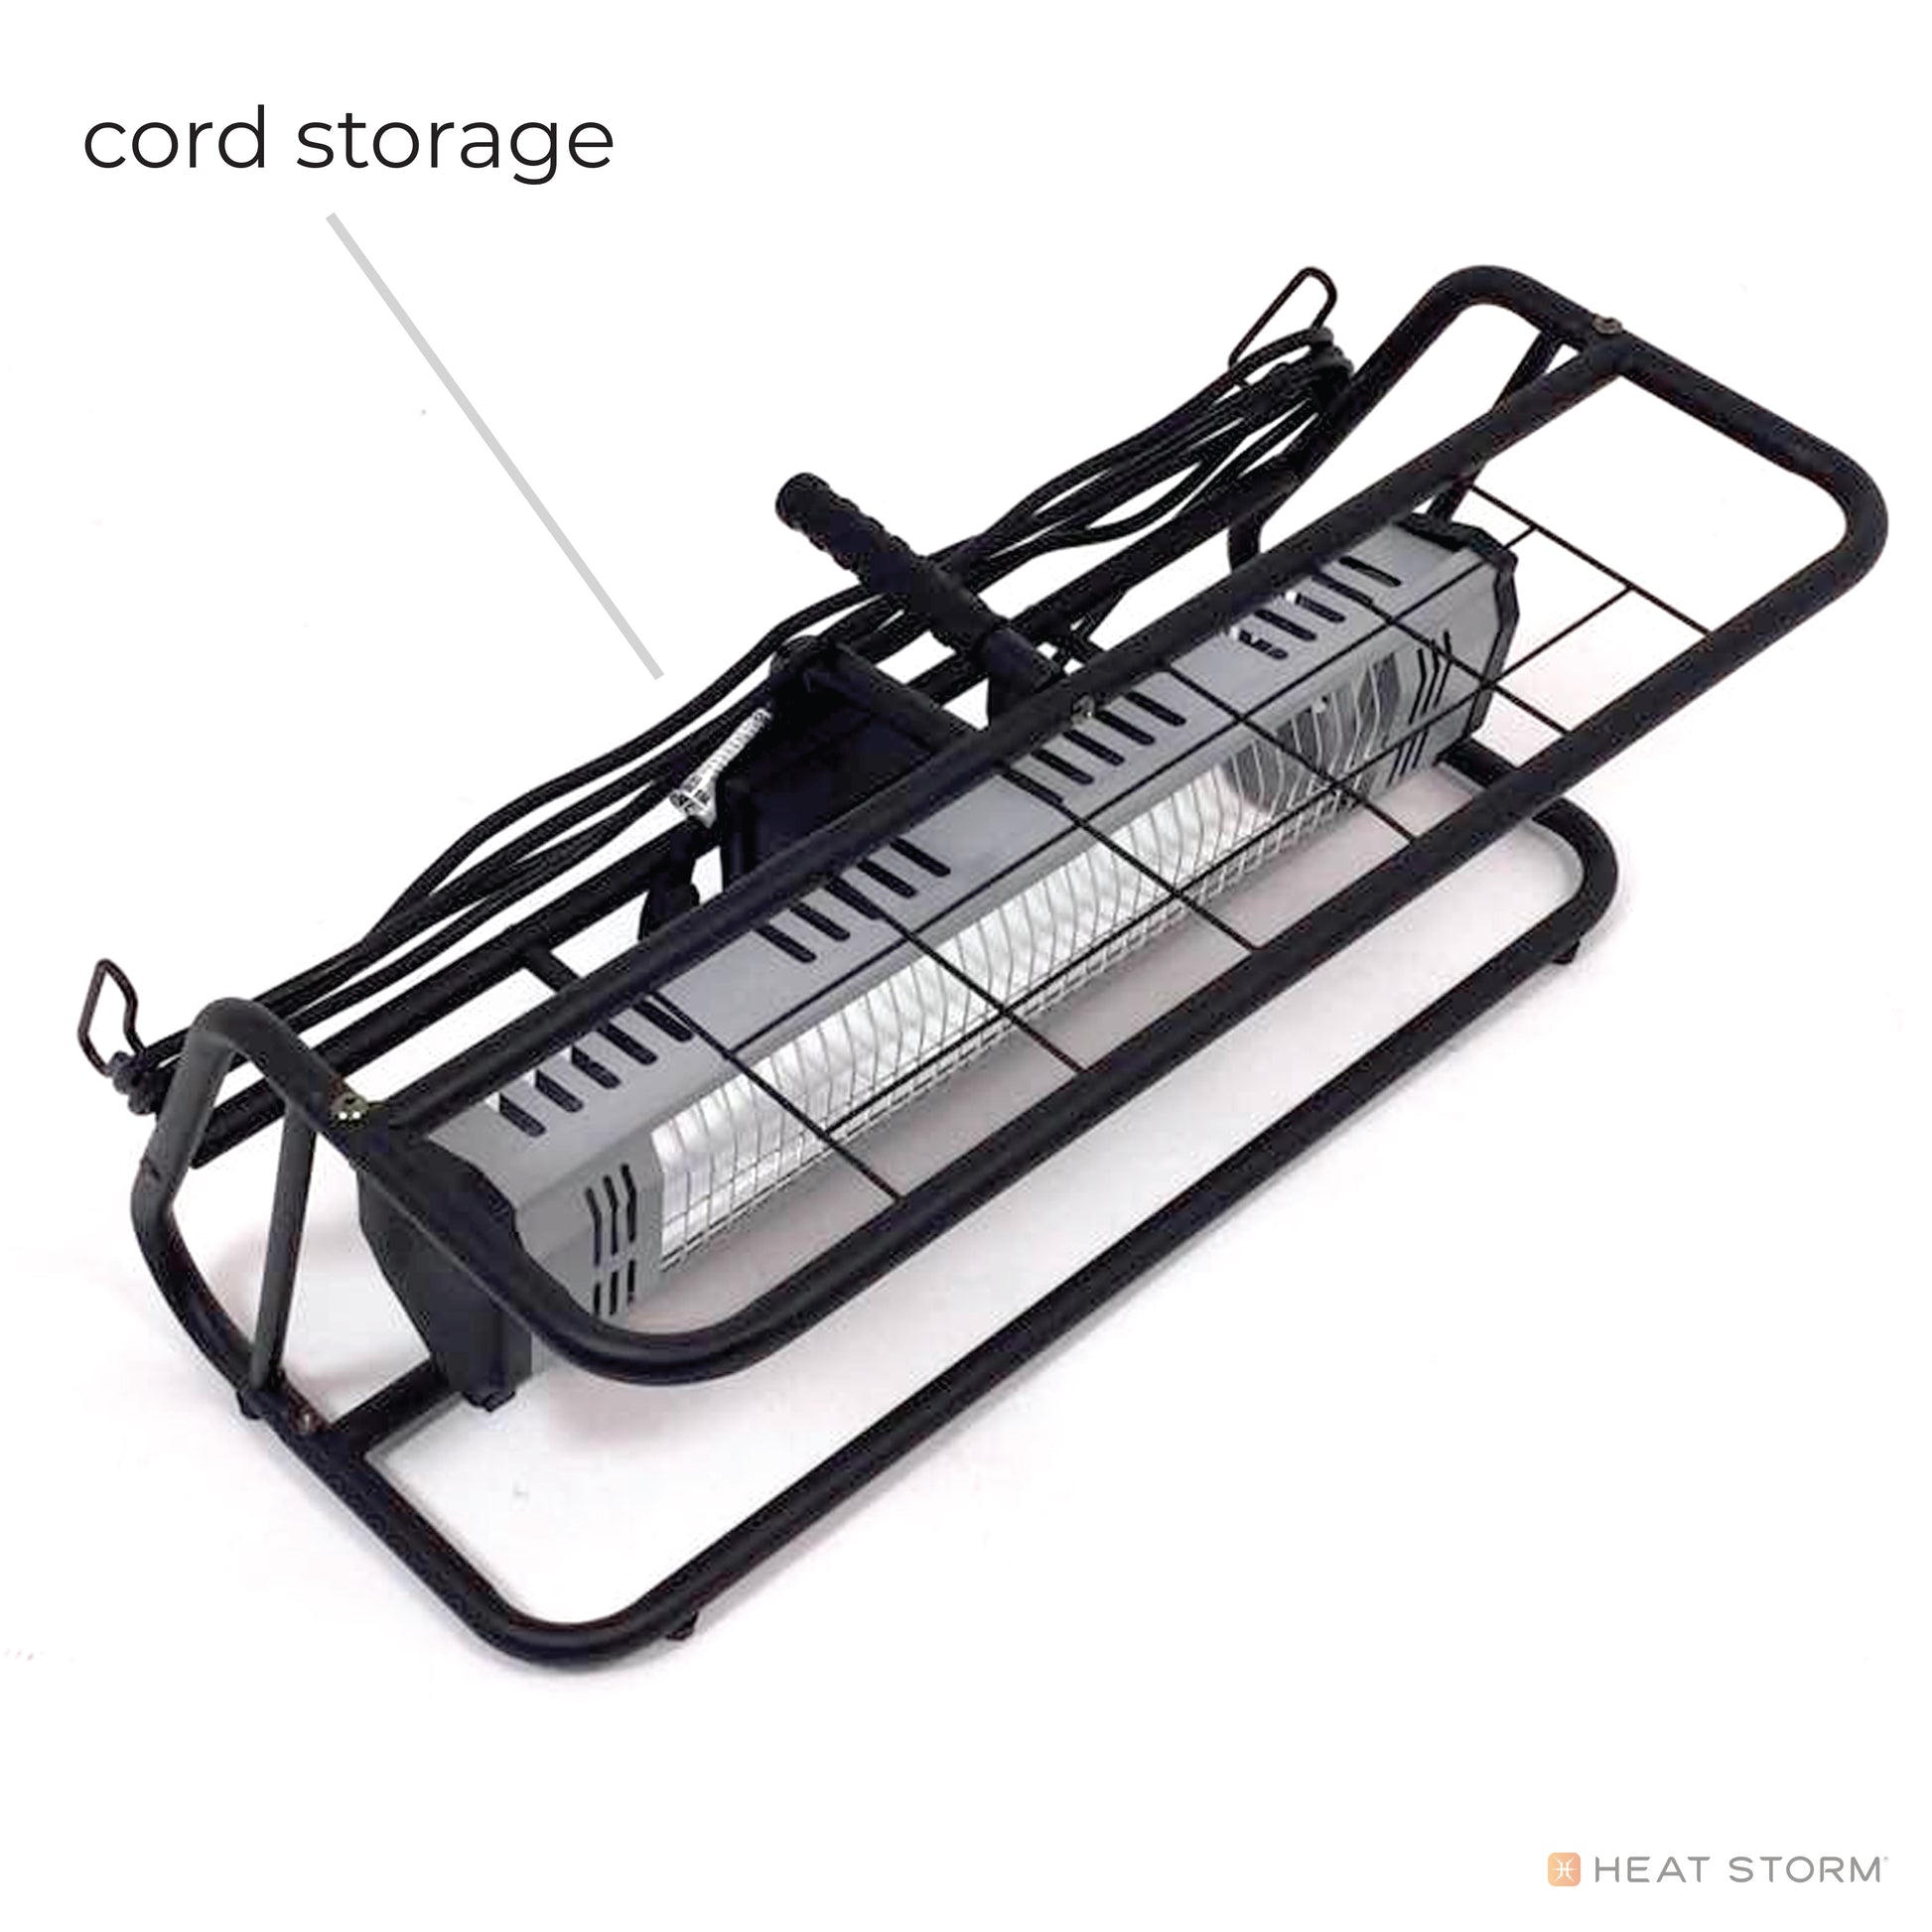 1500 Watt infrared space heater for tradesmen, outdoor, or patio. Cord storage diagram